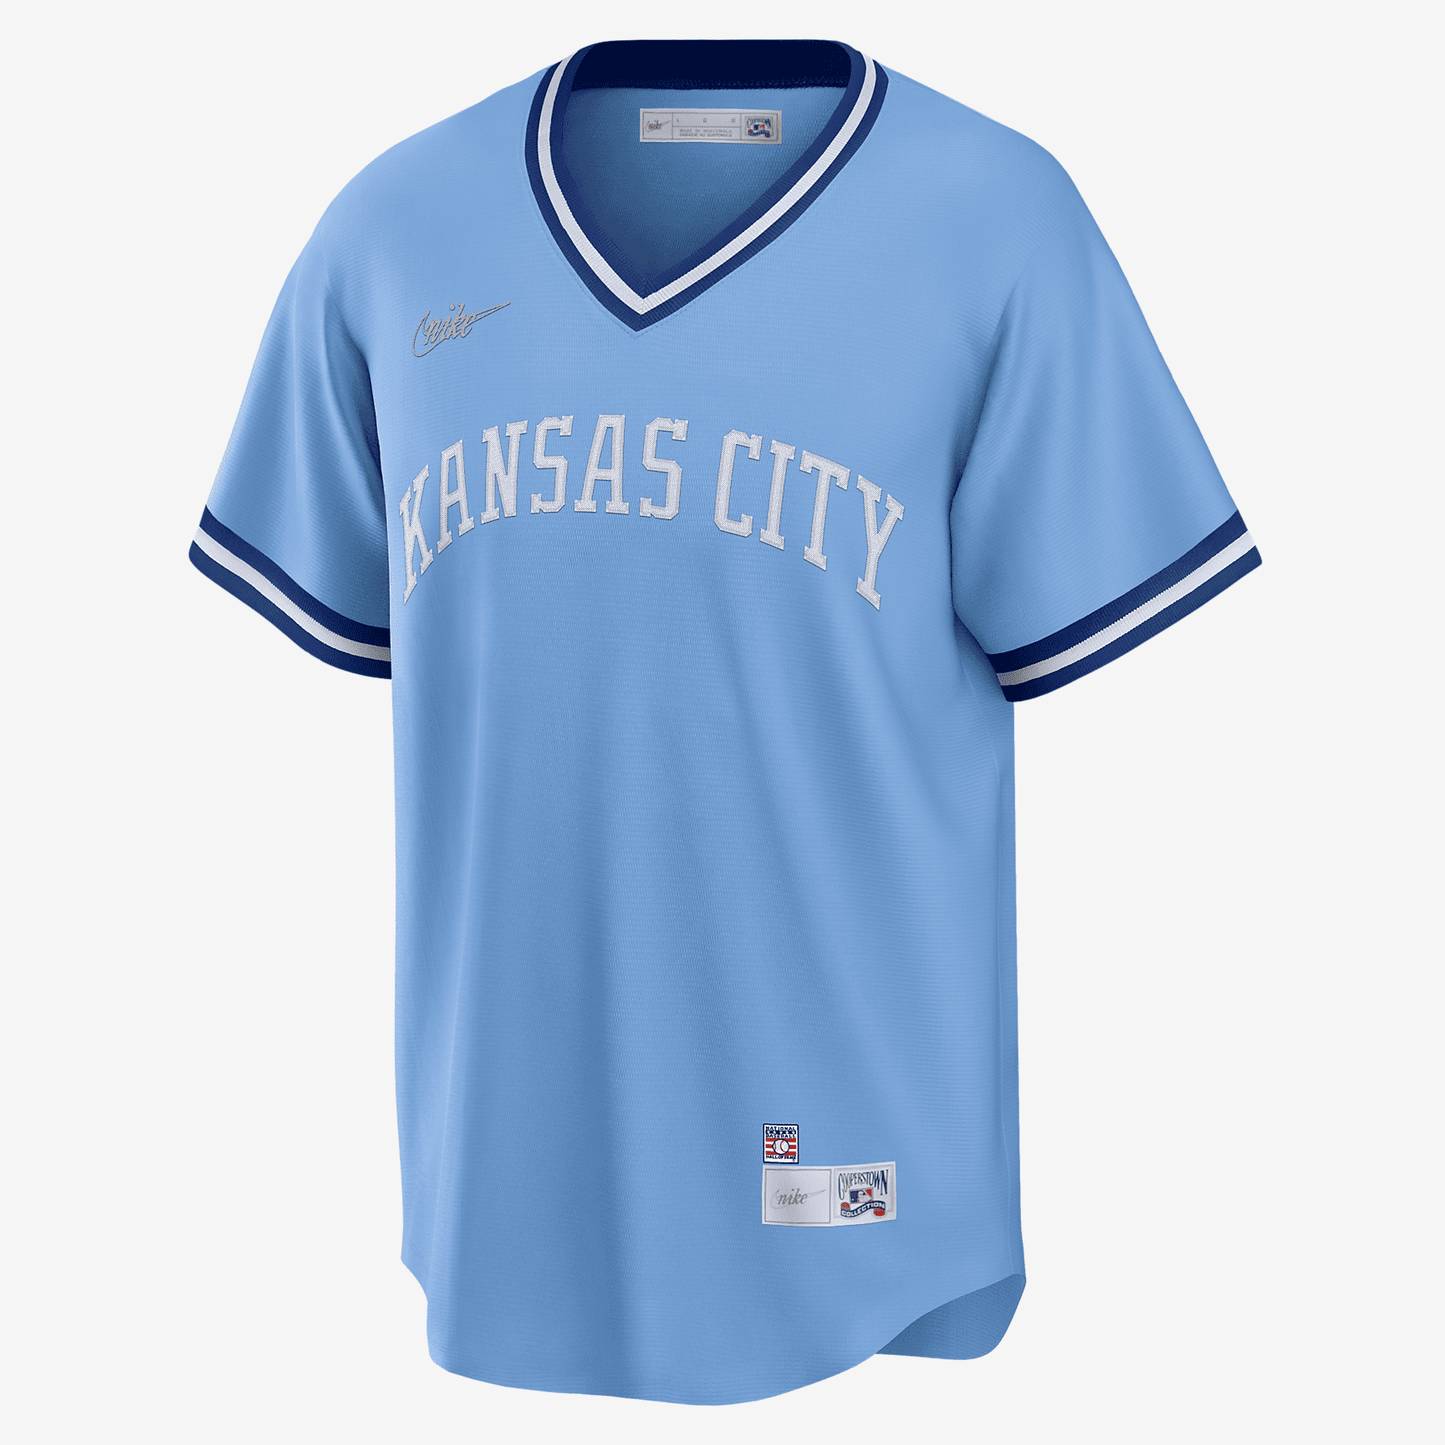 MLB Kansas City Royals (George Brett) Men's Cooperstown Baseball Jersey - Light Blue